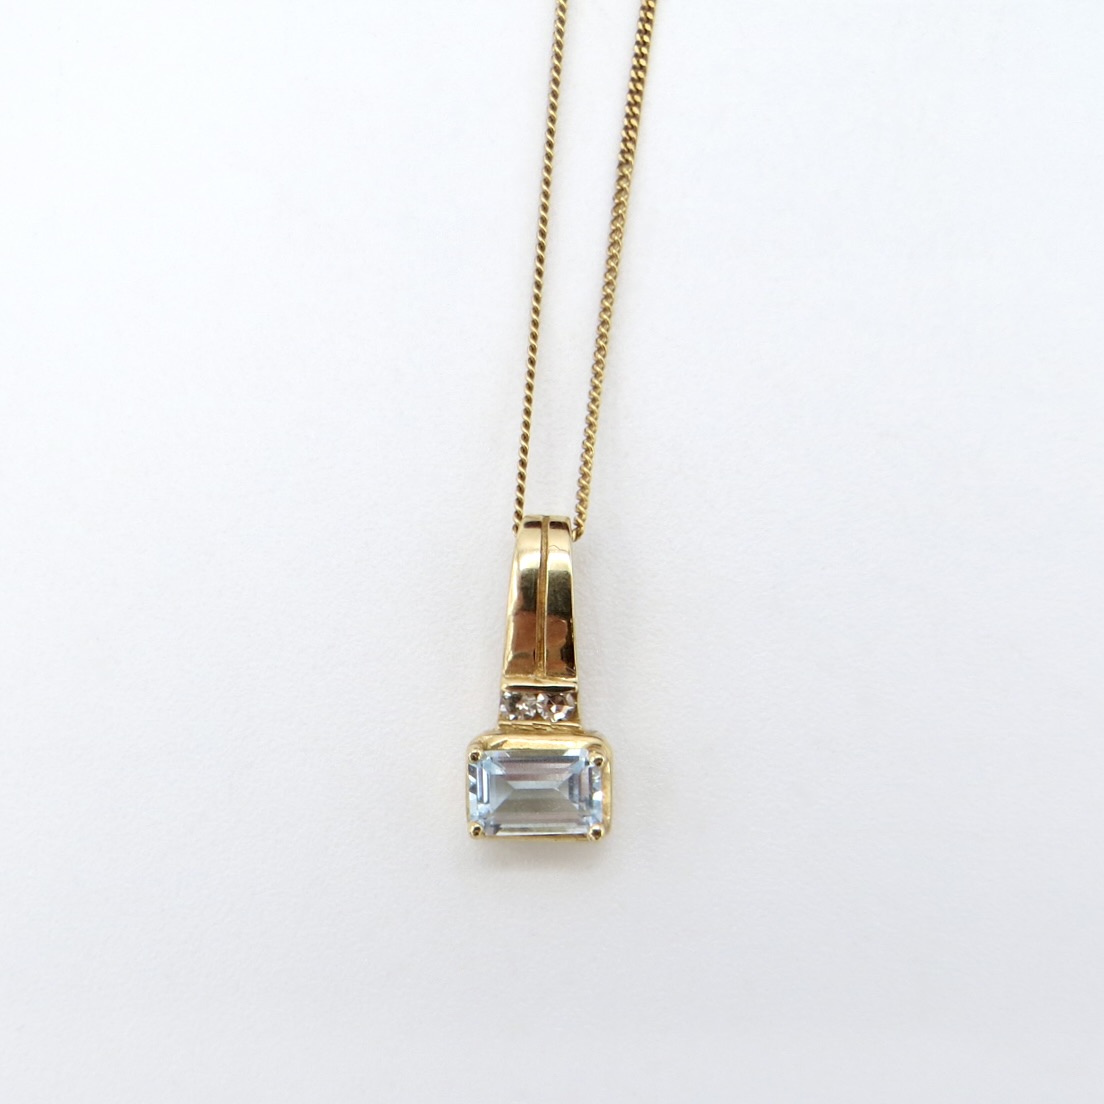 10kt Gold, Topaz and Diamond Necklace